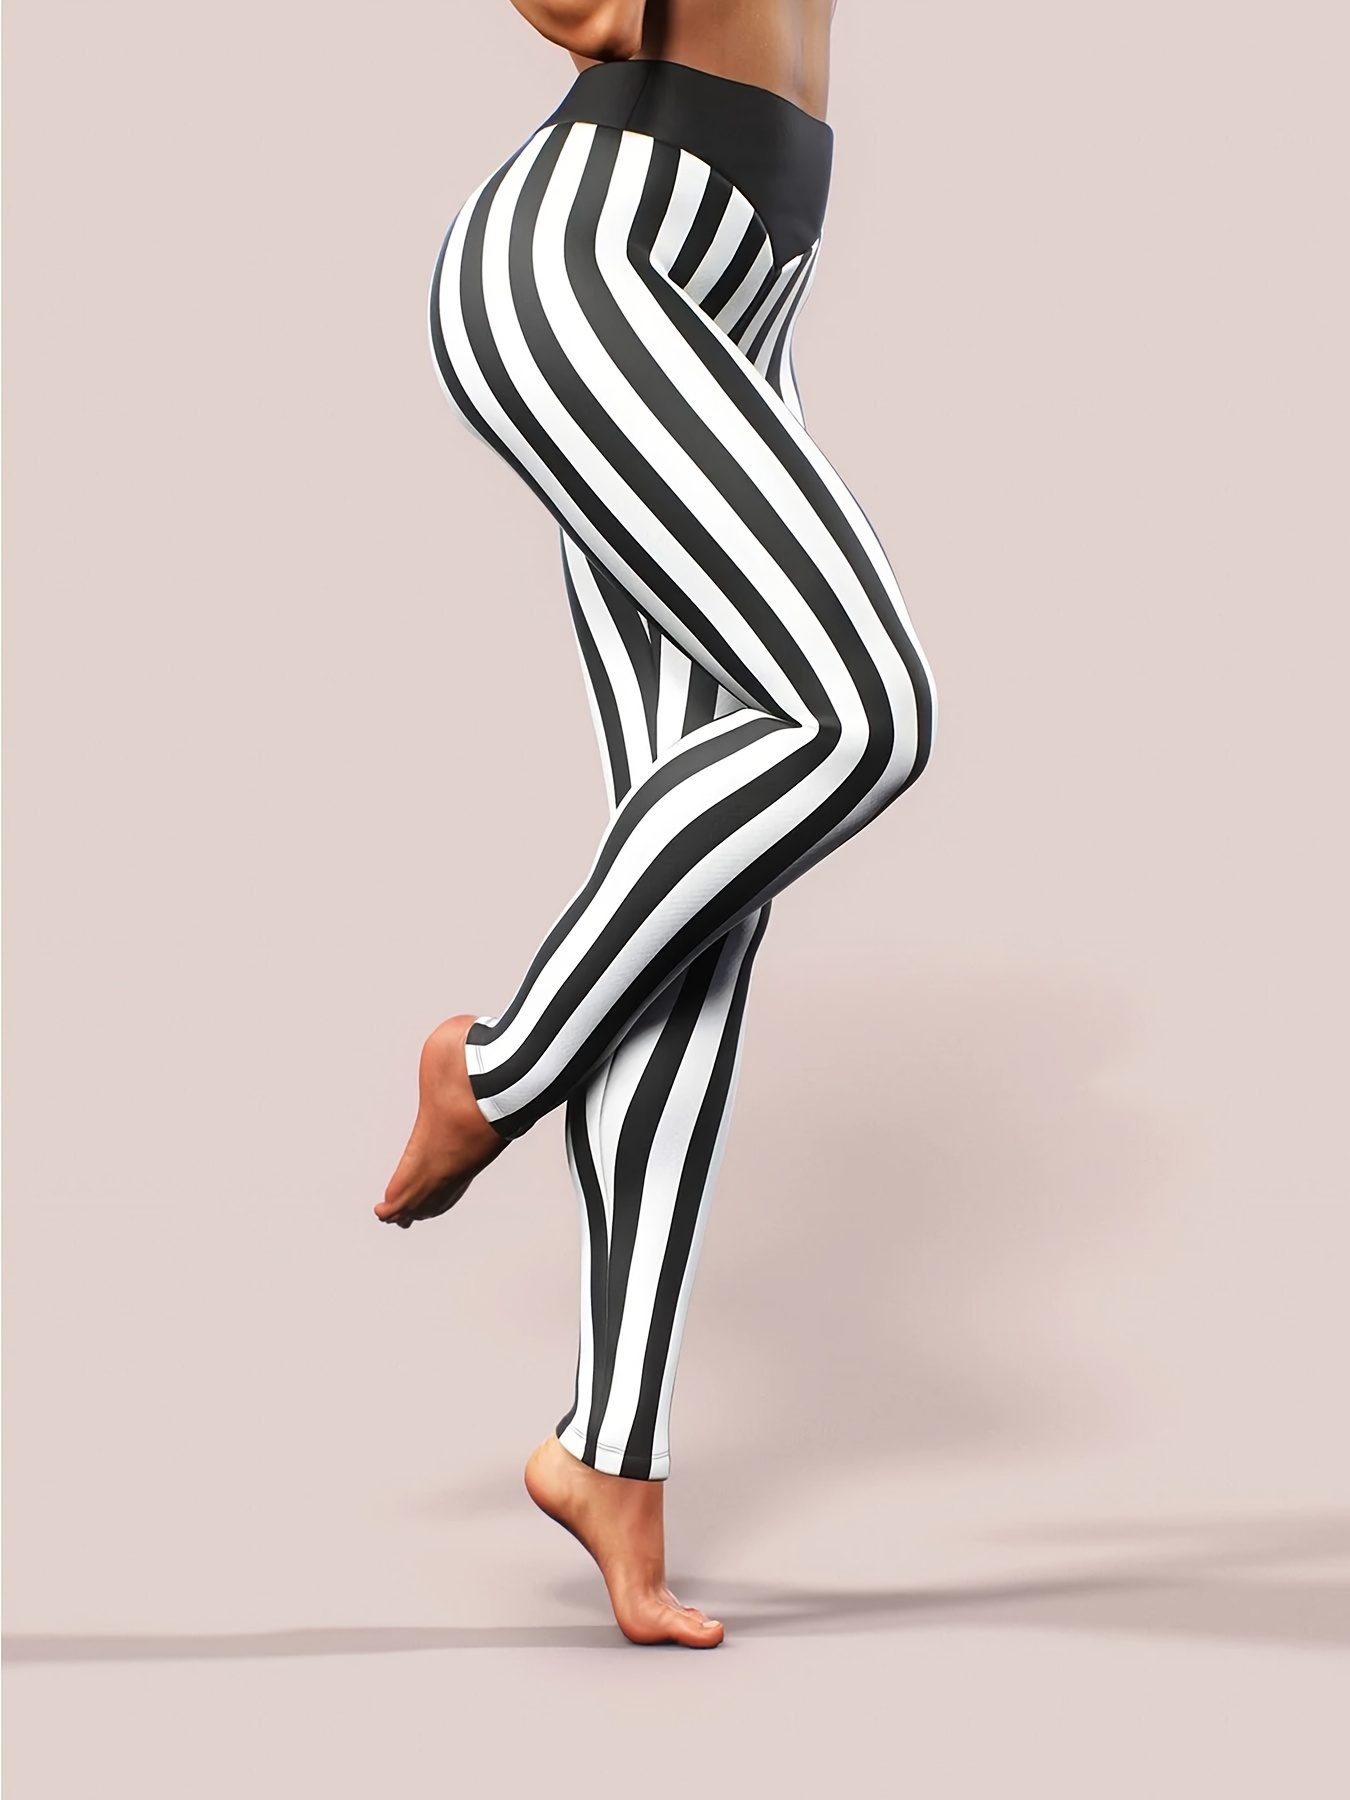 Striped Tights [Plus Size]